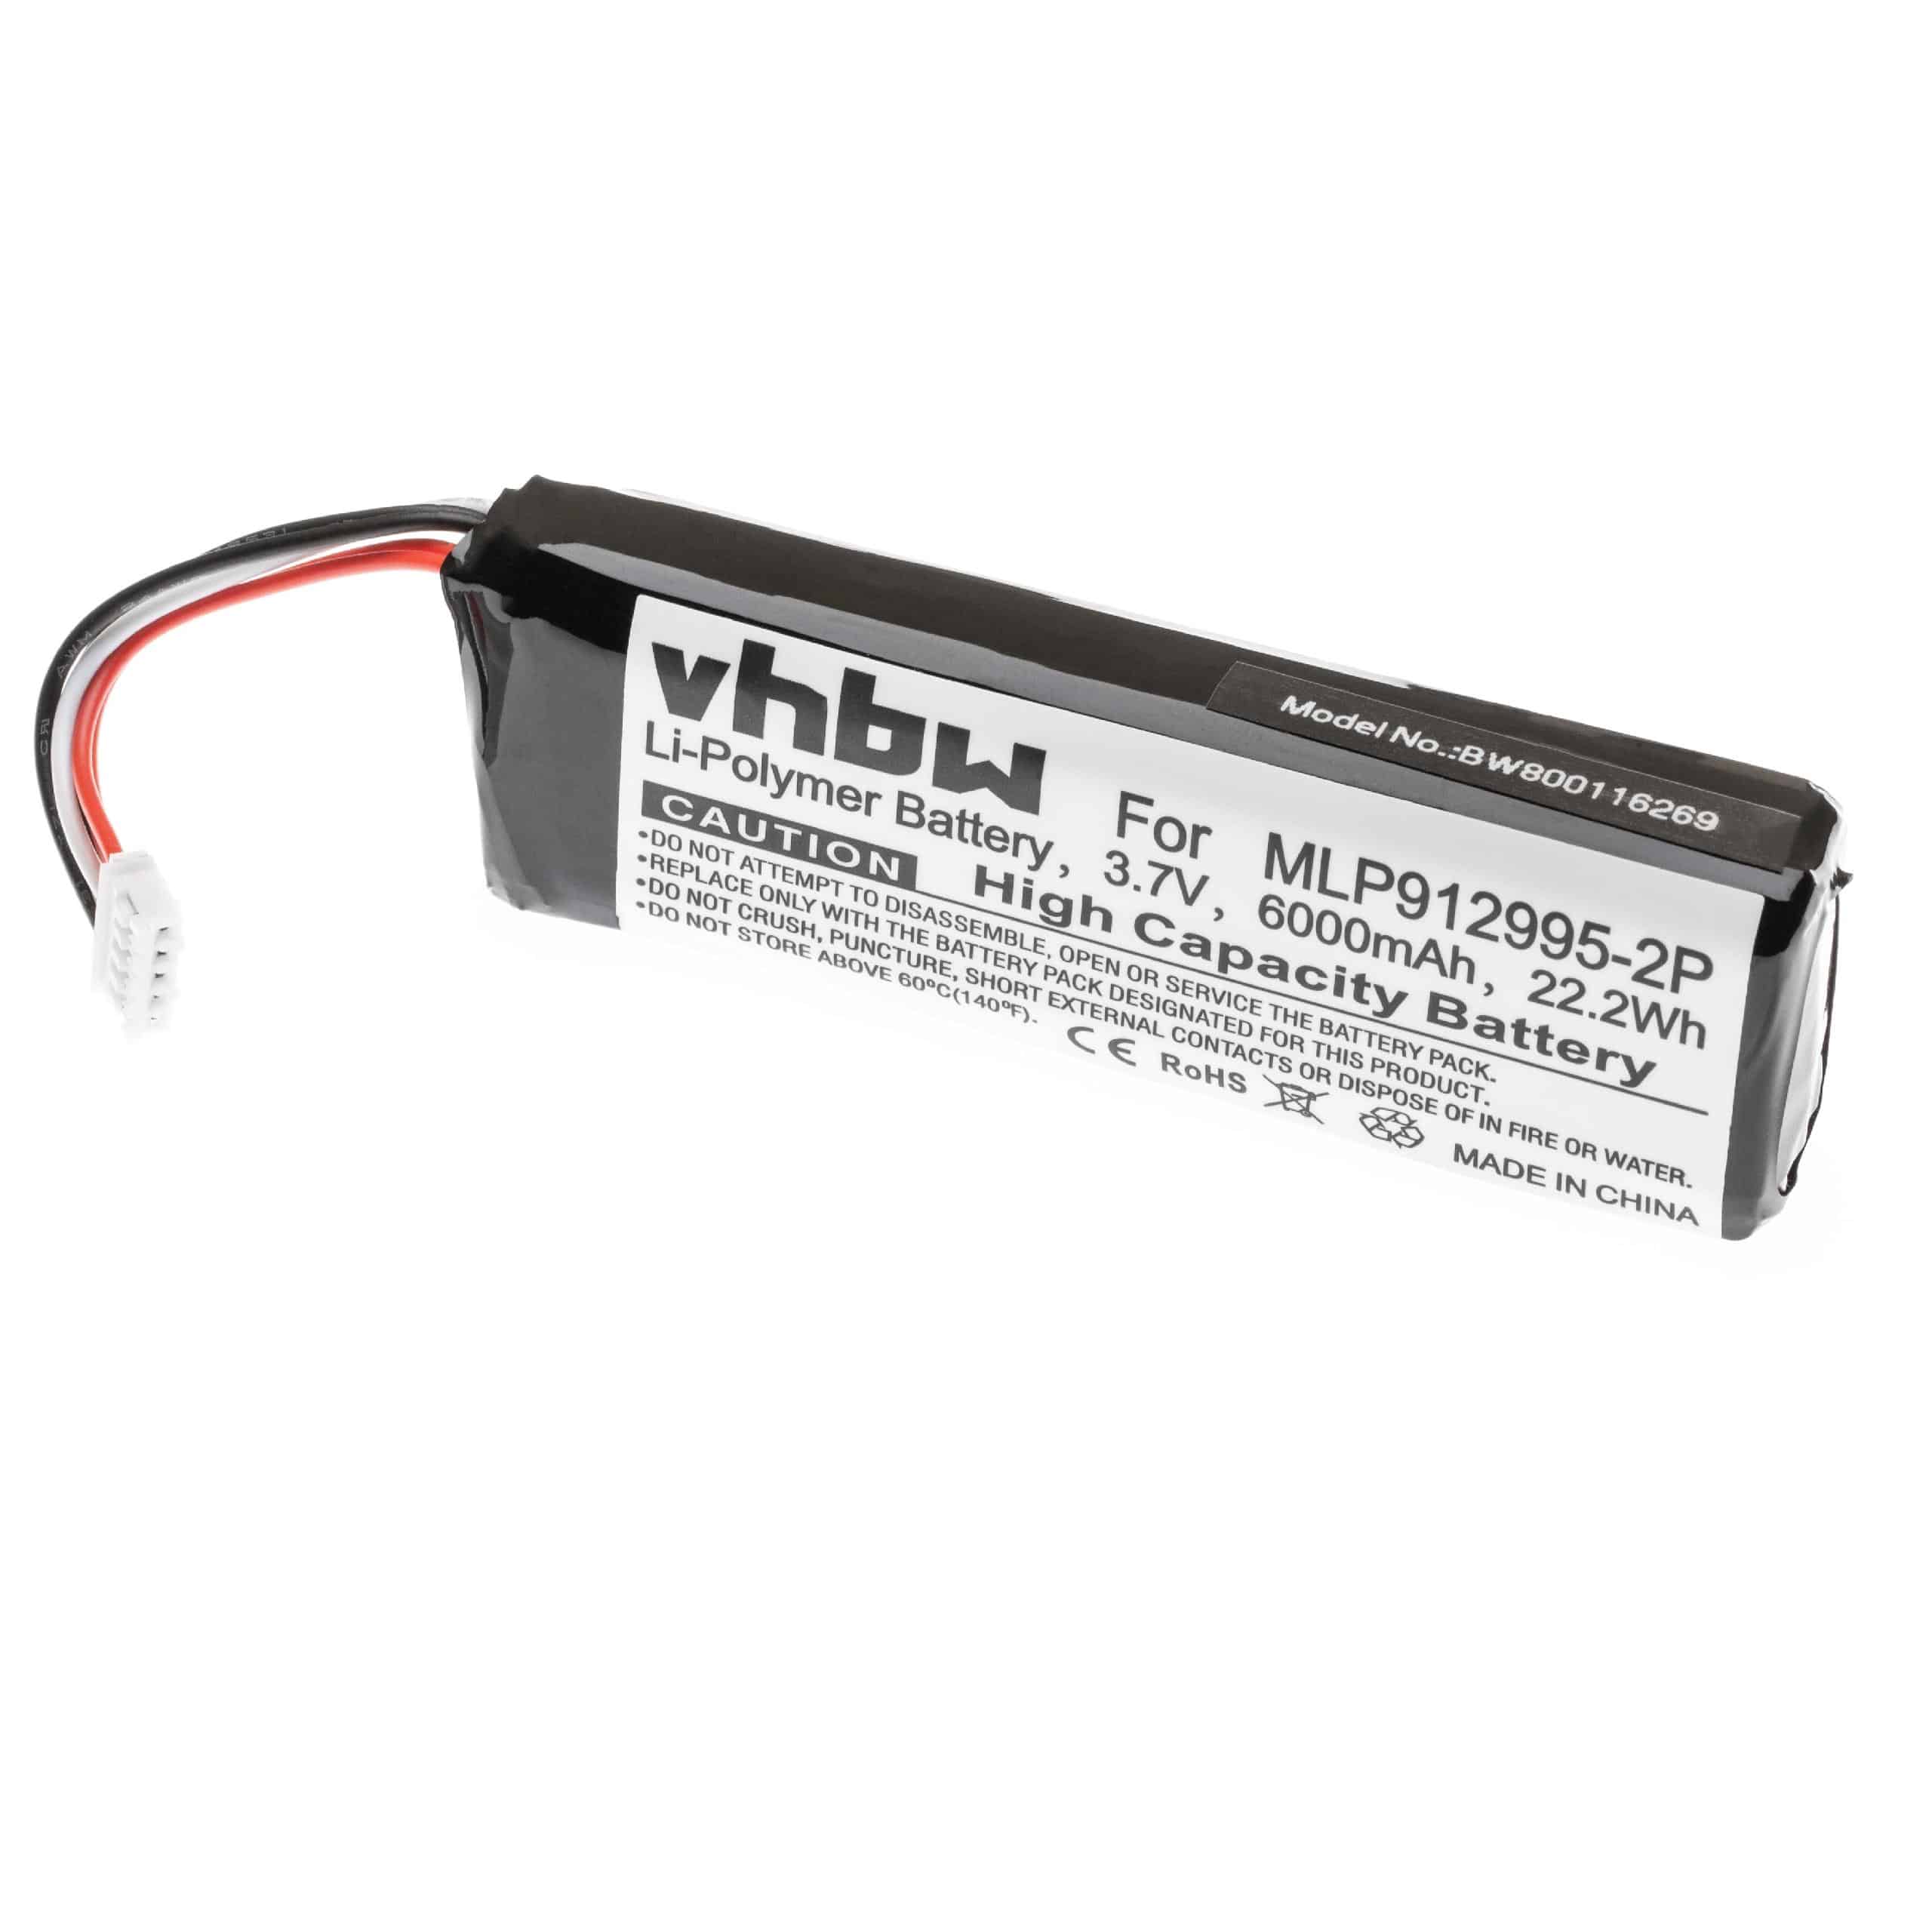 Batteria sostituisce JBL MLP912995-2P per altoparlanti JBL - 6000mAh 3,7V Li-Poly